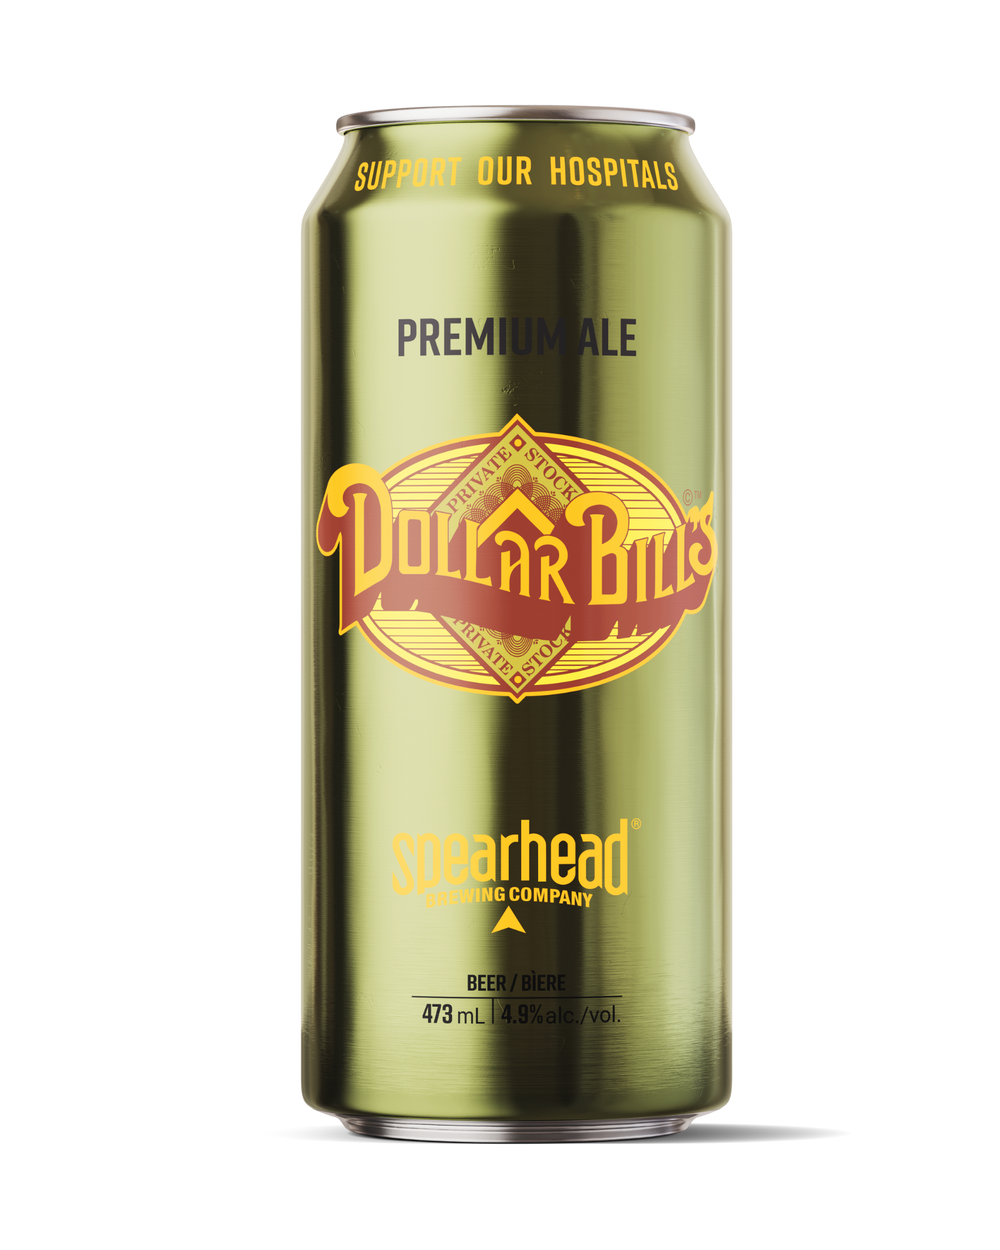 Dollar Bill's Premium Ale